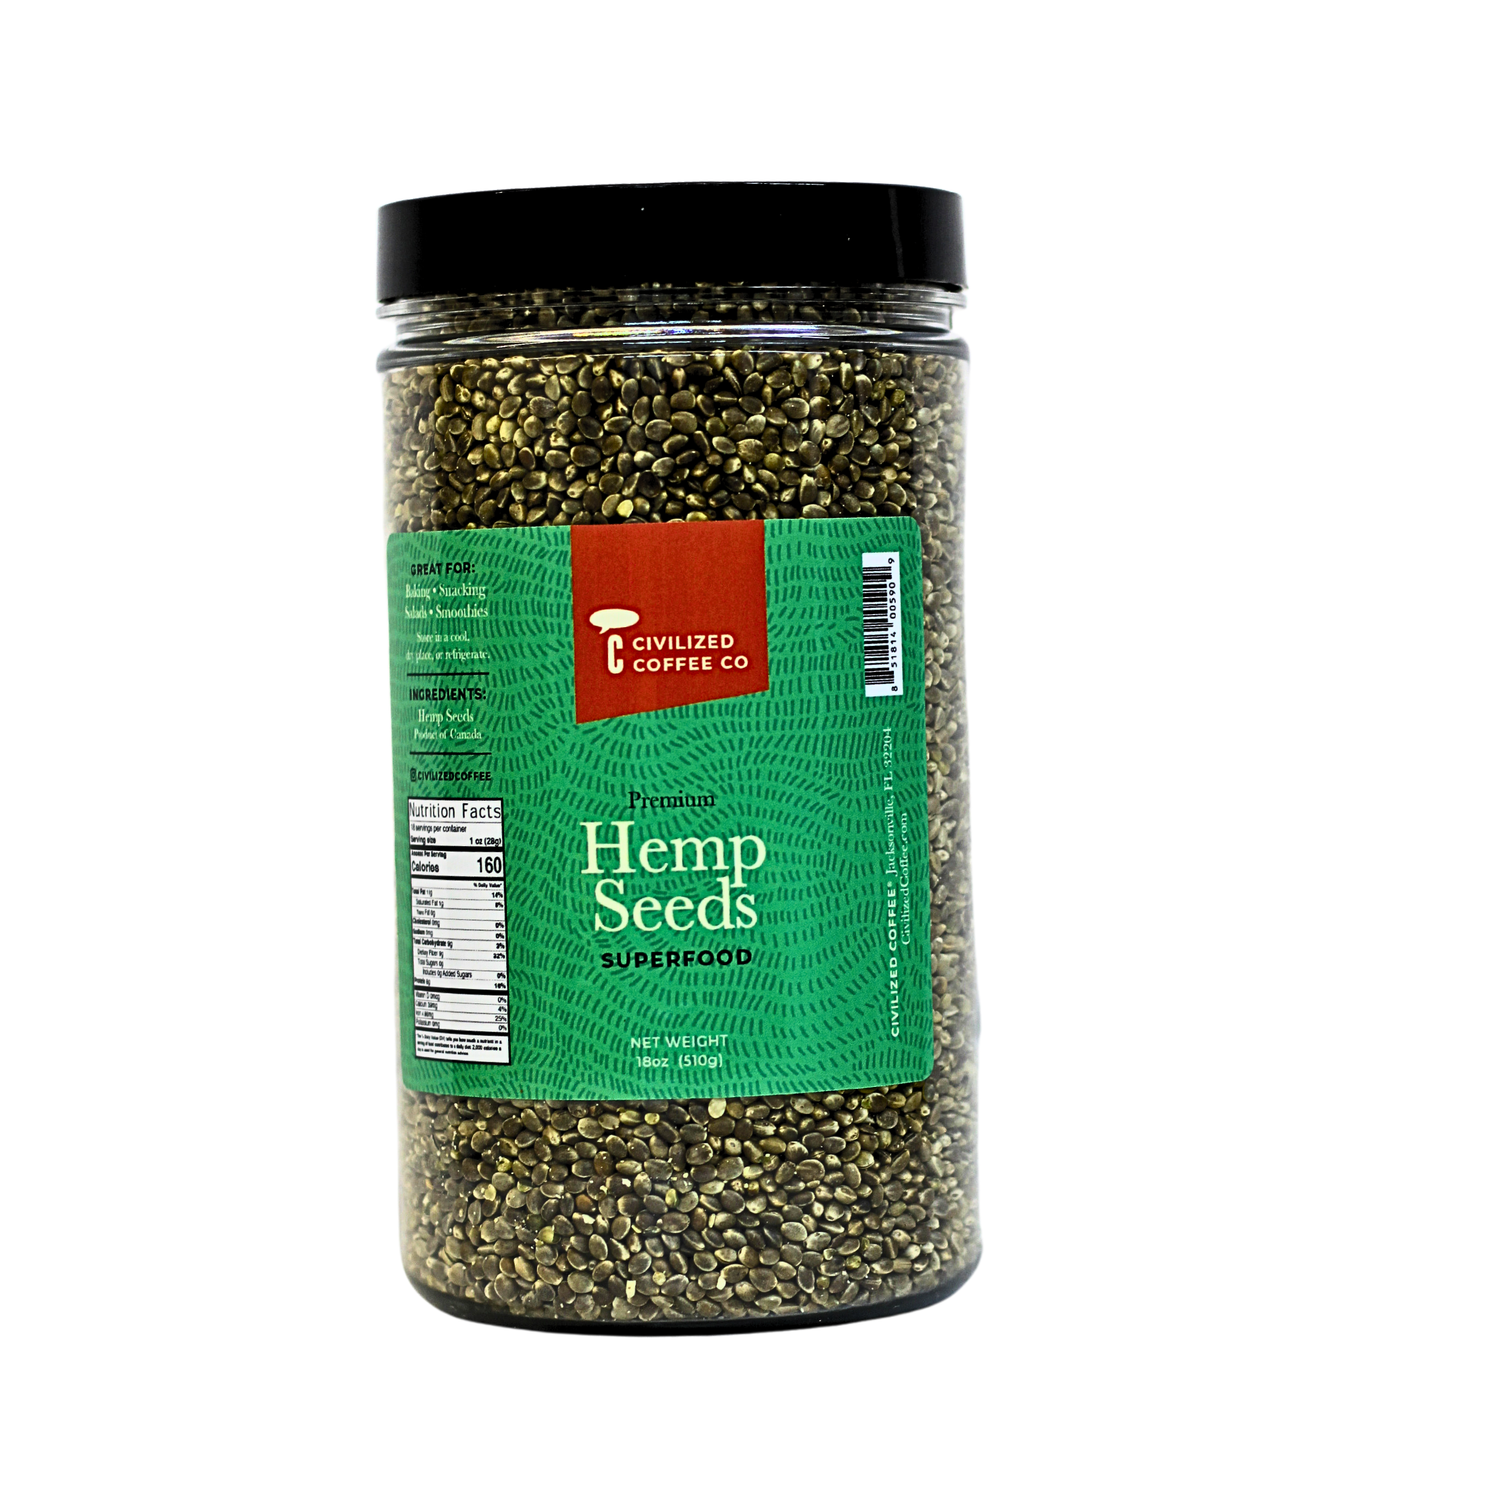 Hemp Seeds peeled · Organic · Vegan · Gluten Free - 90g